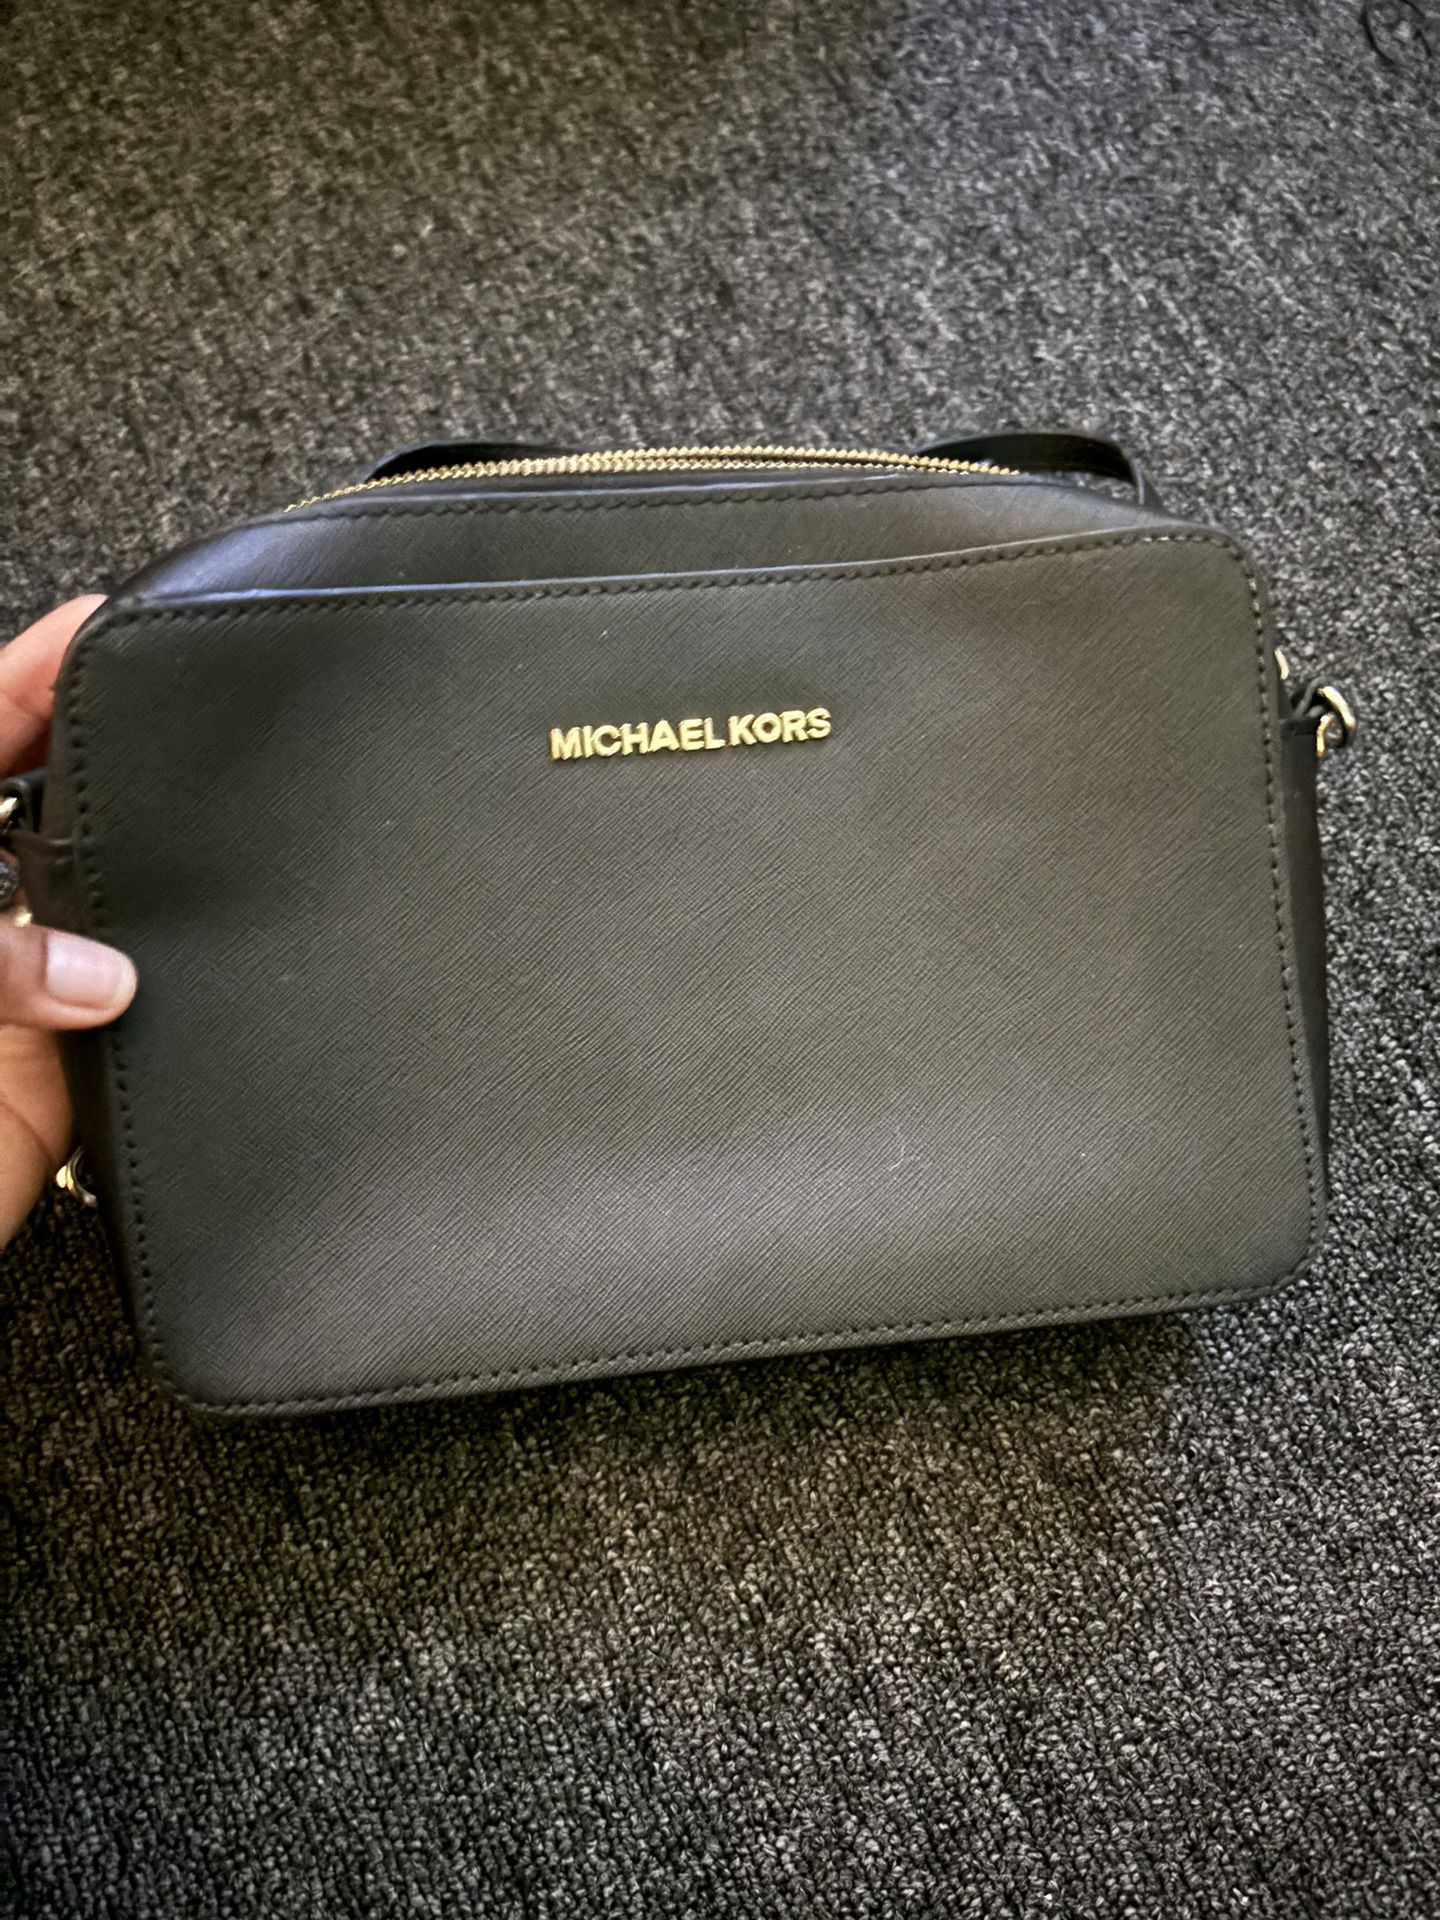 Michael Kors Crossbody Bag Black And Gold